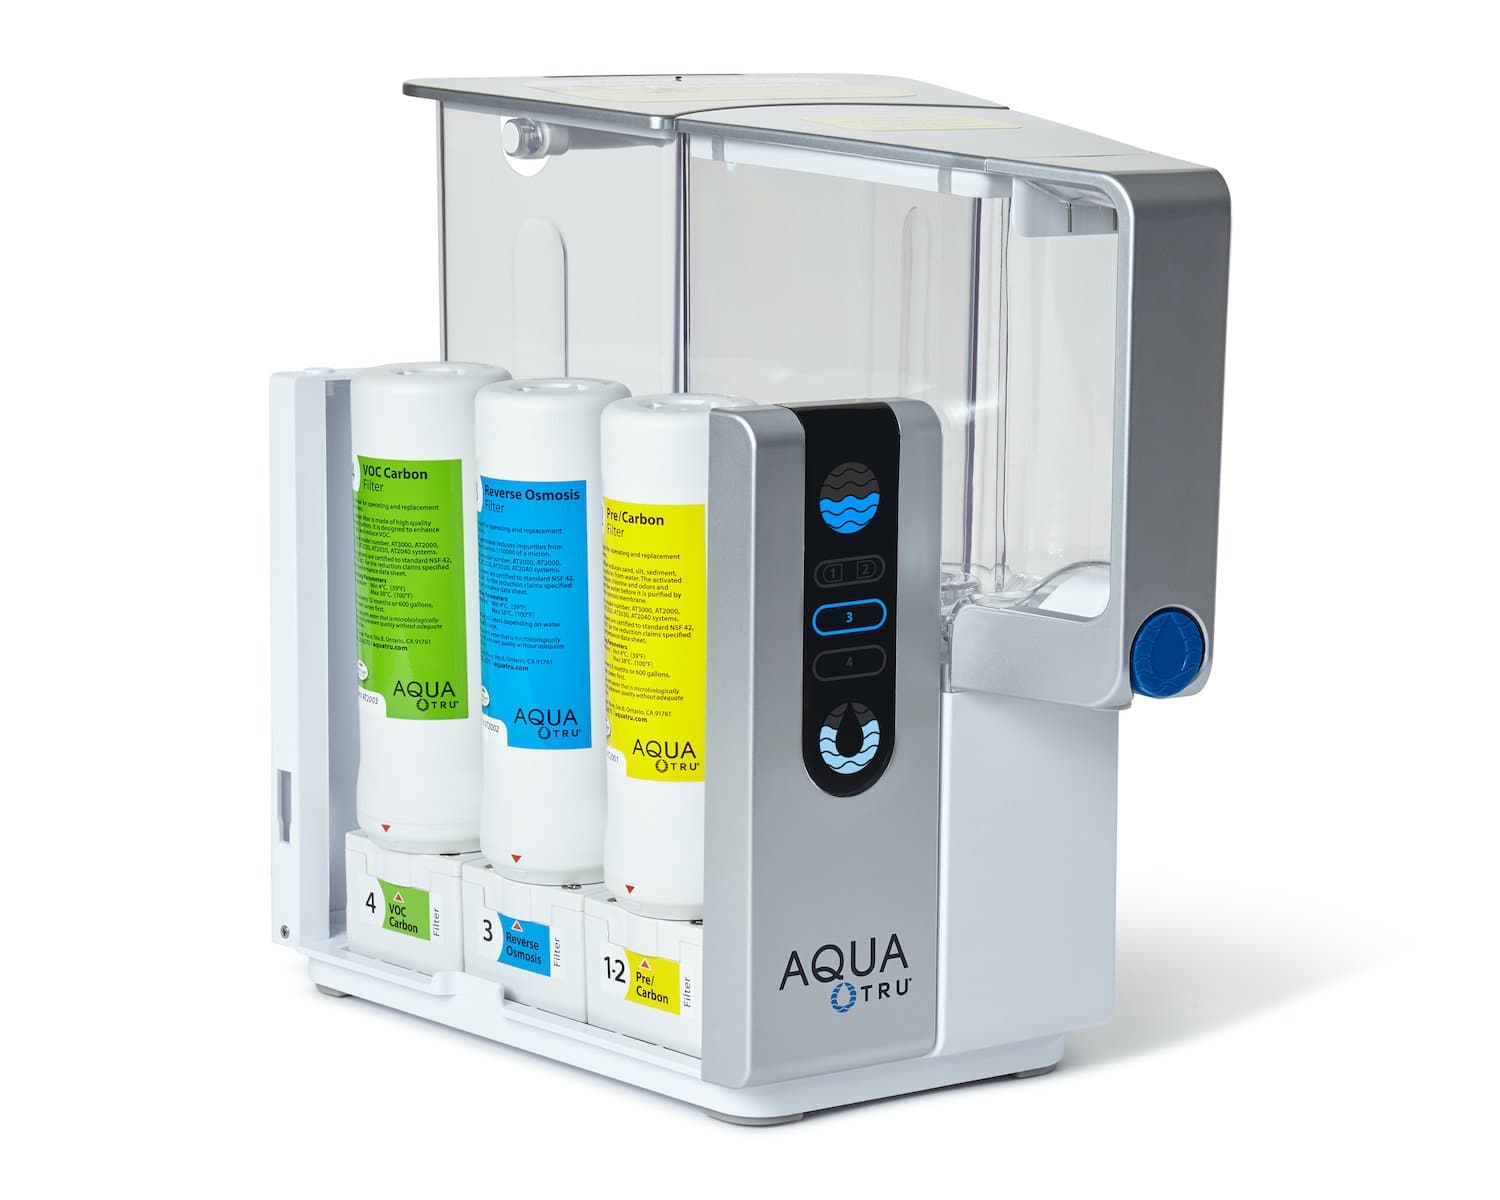 AquaTru Review - Laboratory Tested Water 